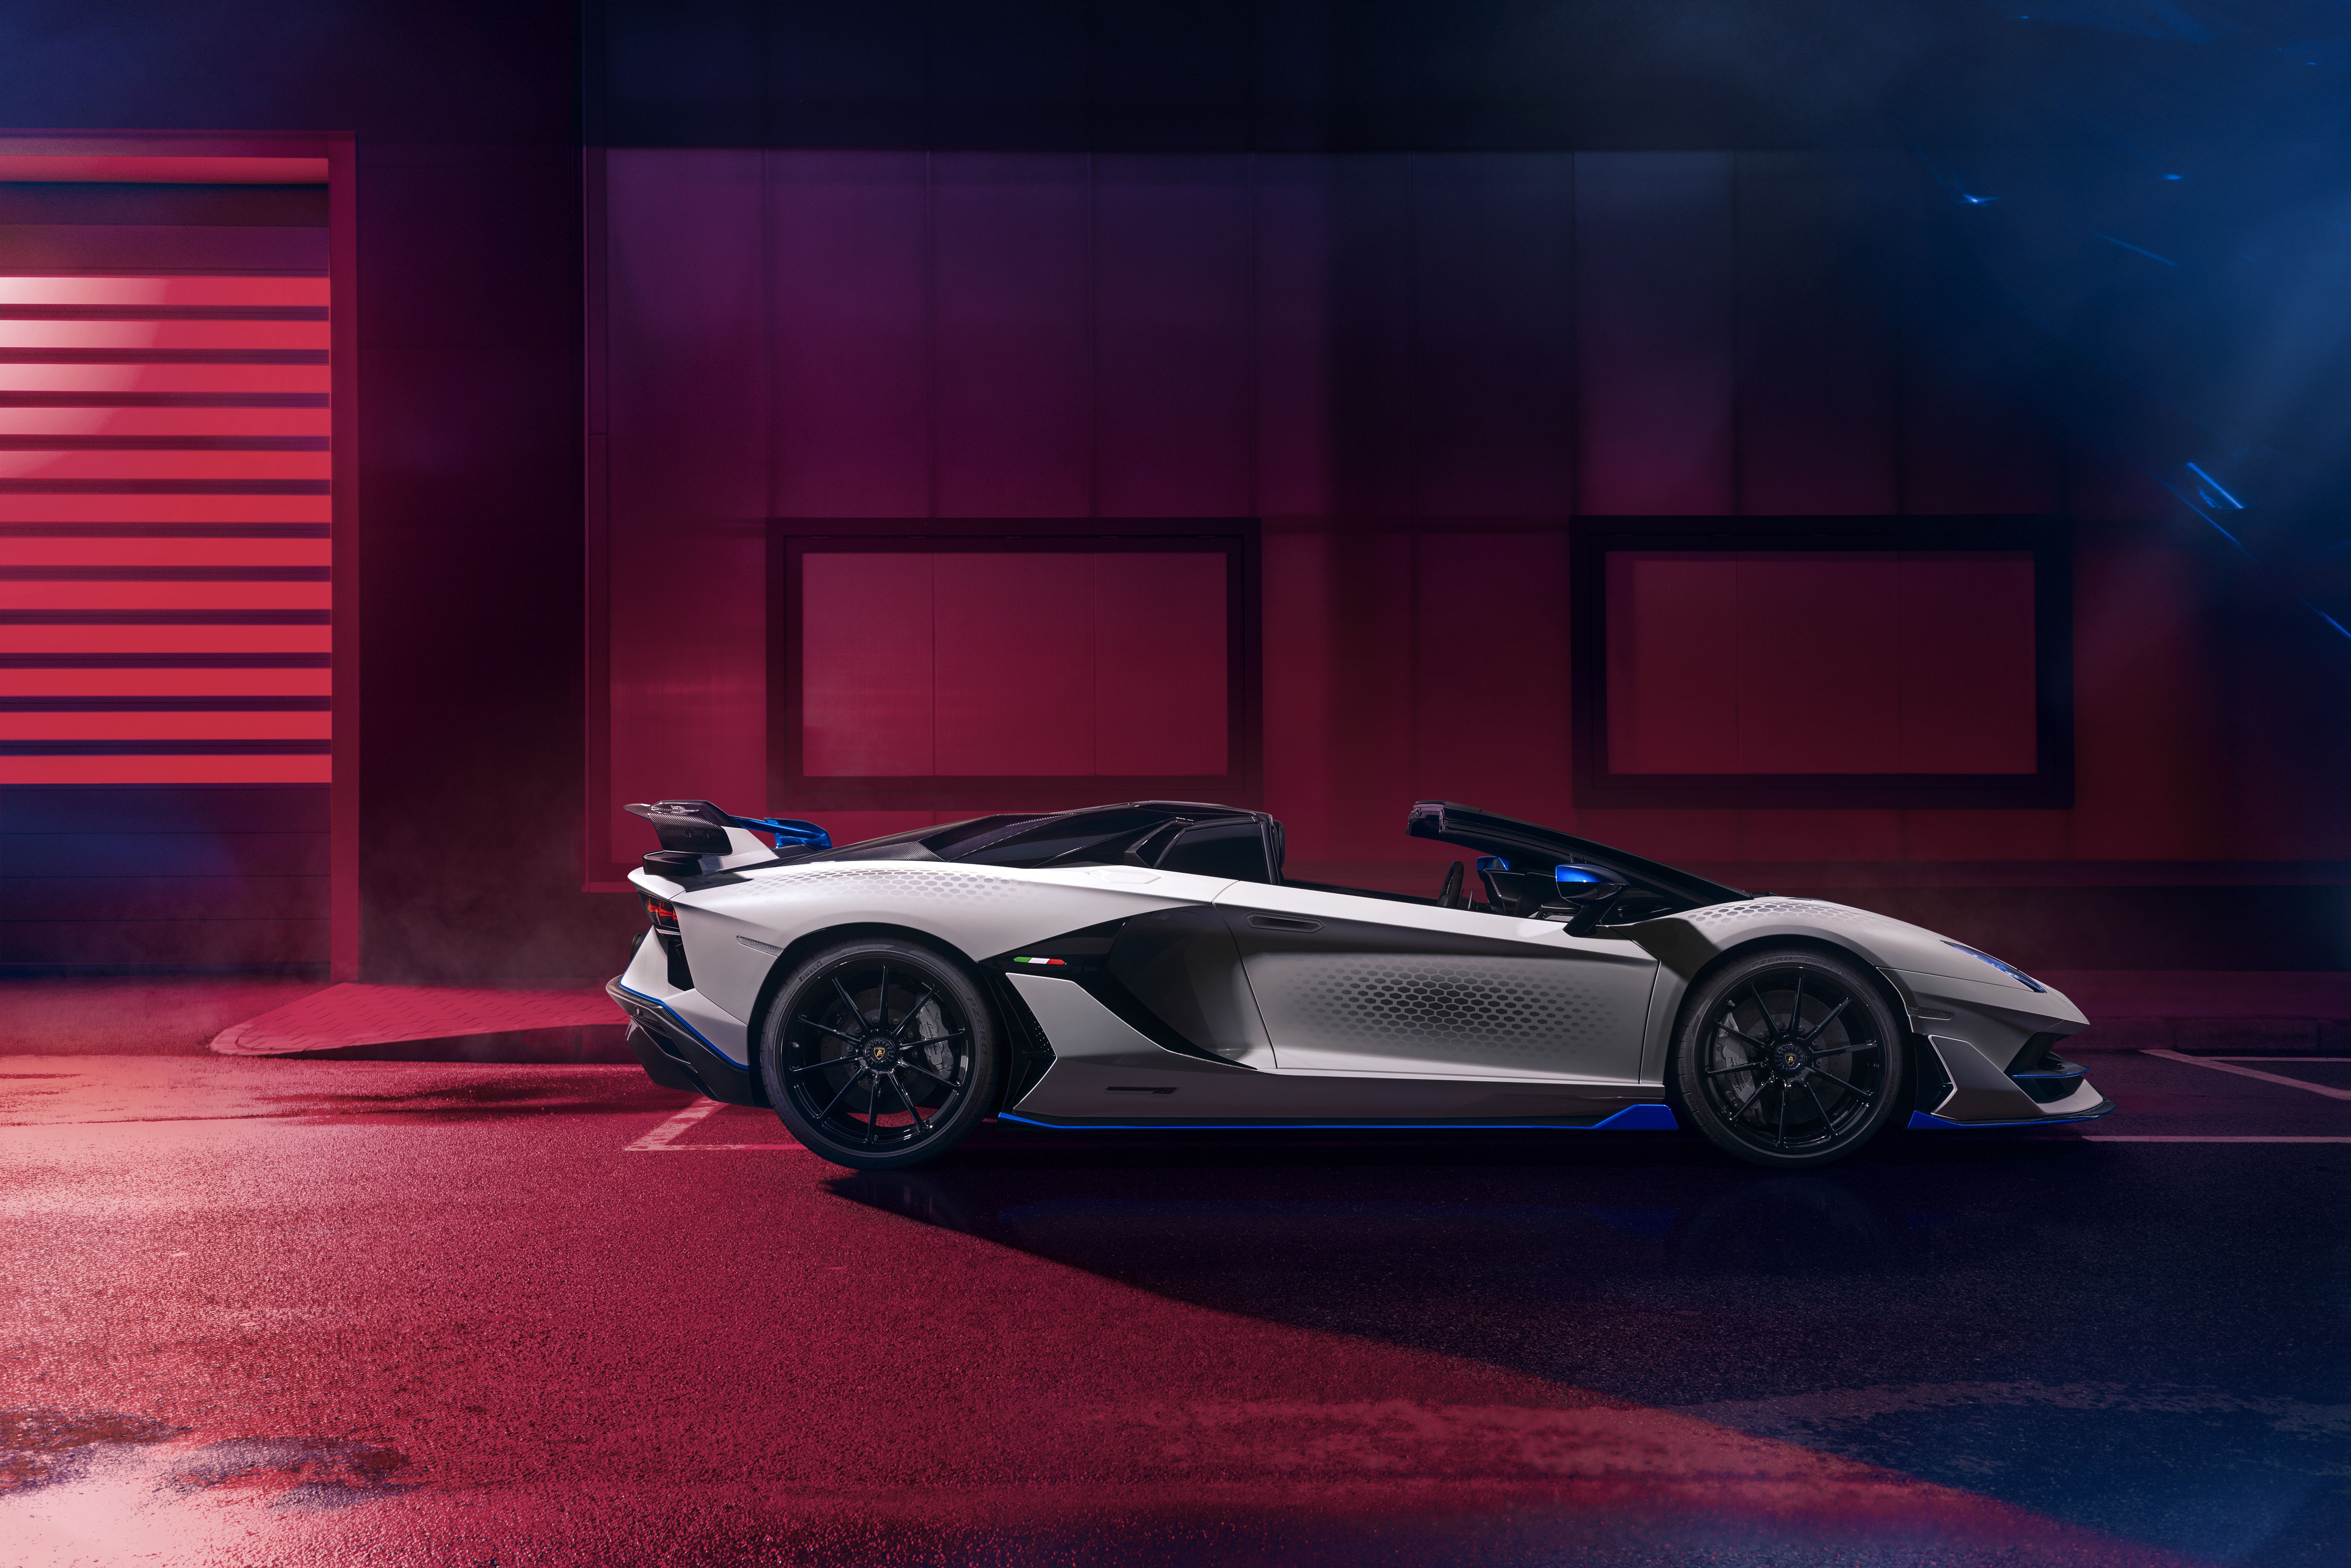 Lamborghini Aventador SVJ Roadster Xago Edition, HD Cars, 4k Wallpaper, Image, Background, Photo and Picture